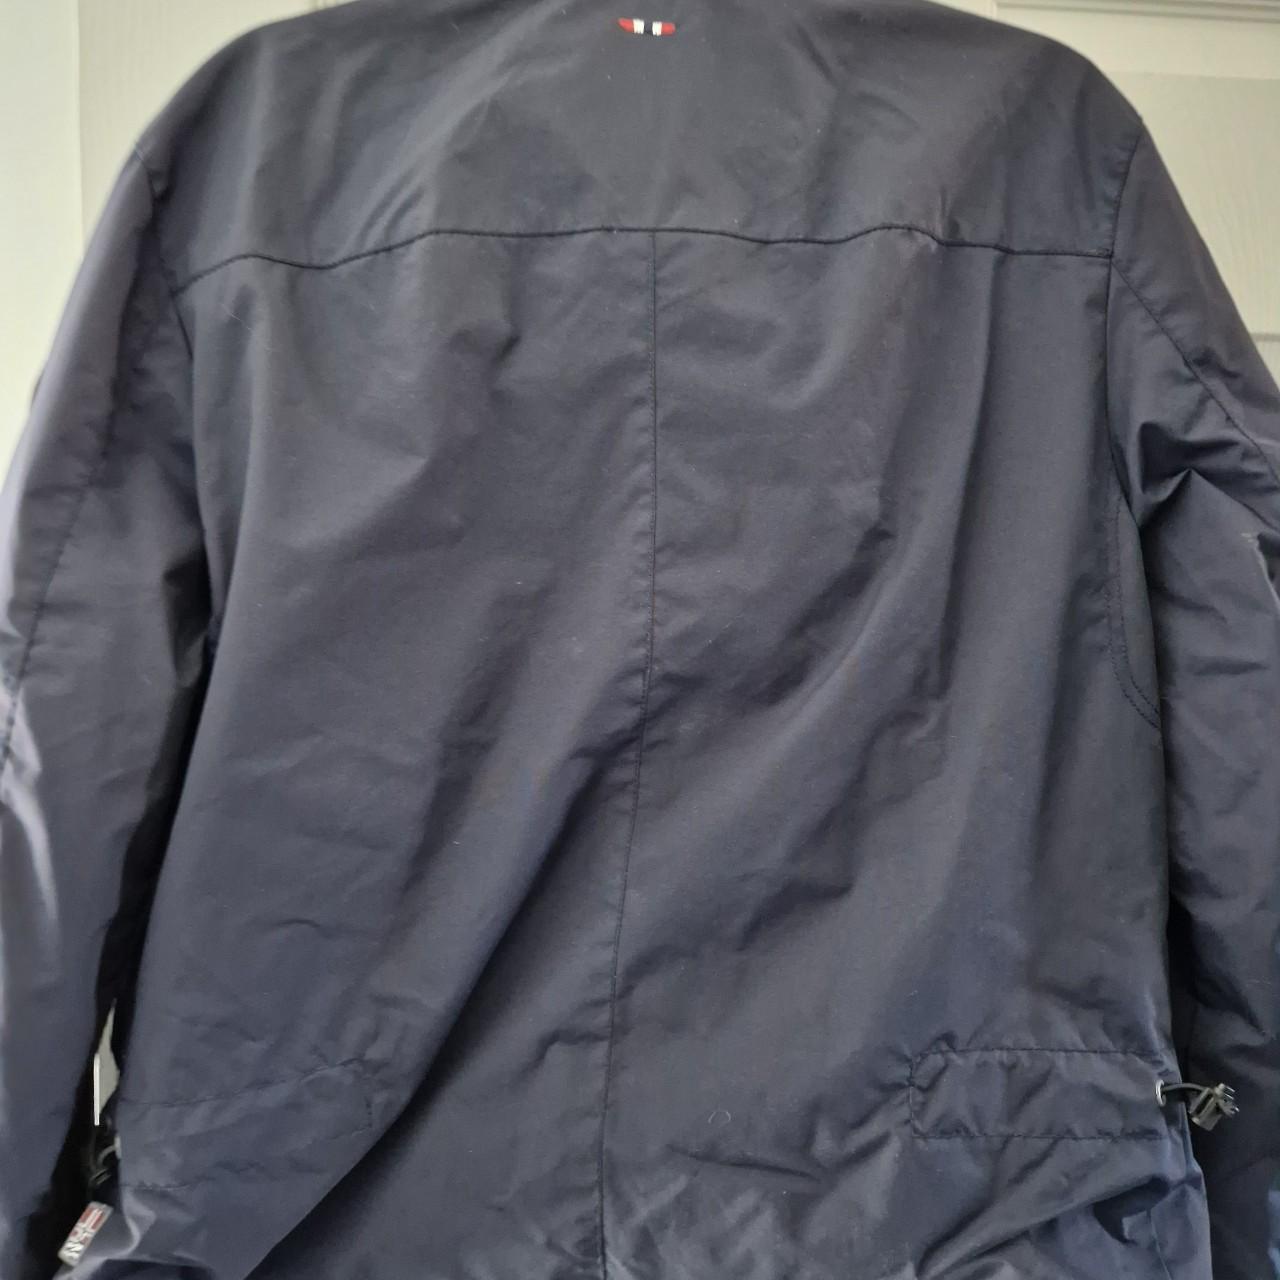 Napapijri jacket. Excellence condition worn twice. - Depop